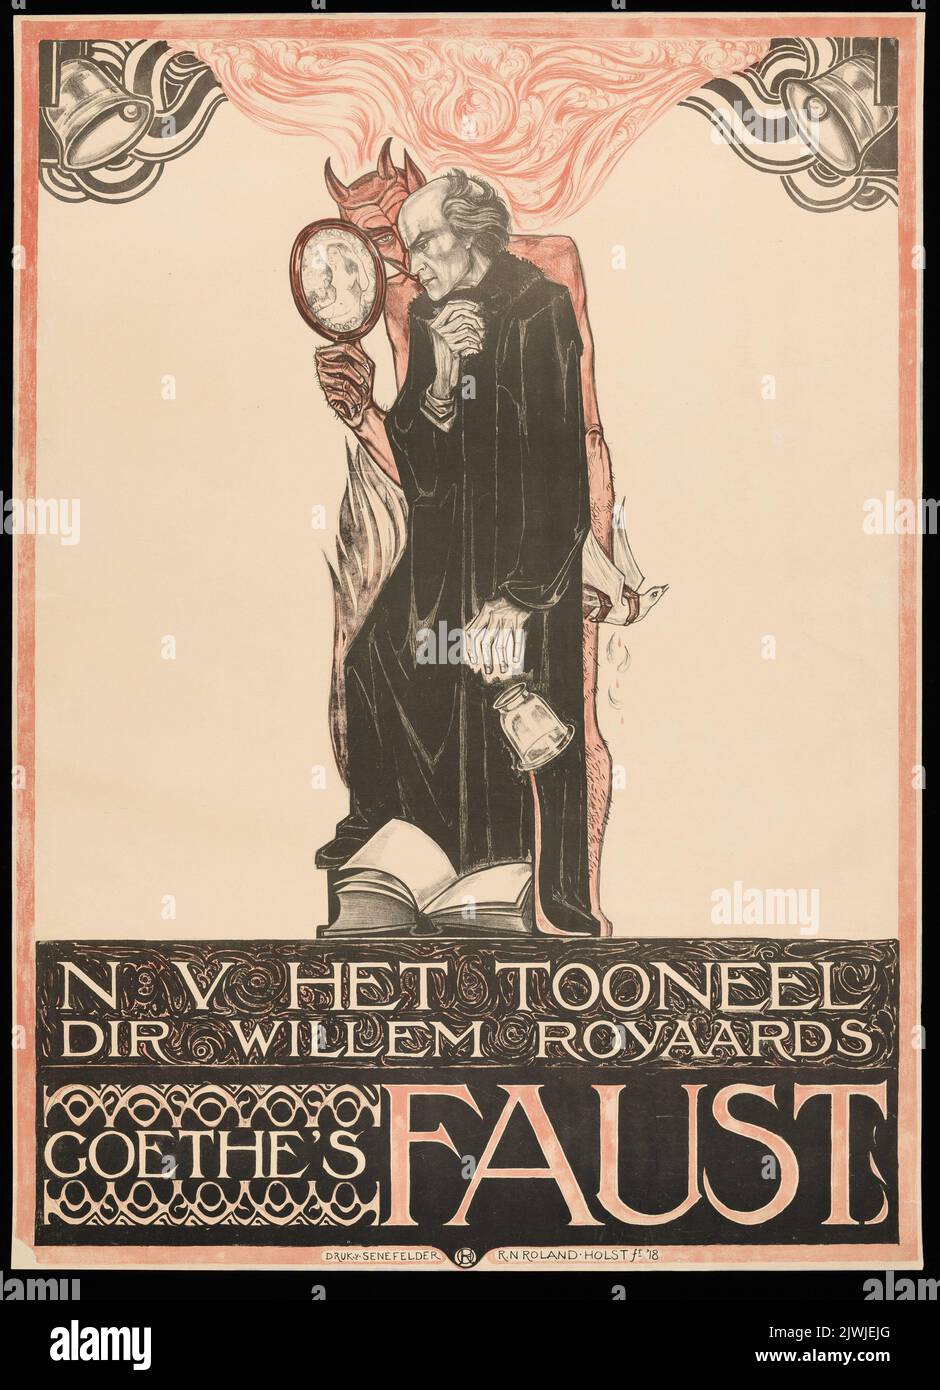 N V Het Tooneel Dir Willem Royaards Faust de Goethe. Holst, Richard Niklaus Roland (1868-1938), auteur, Senefelder Amsterdam (Holandia ; drukarnia), imprimerie Banque D'Images